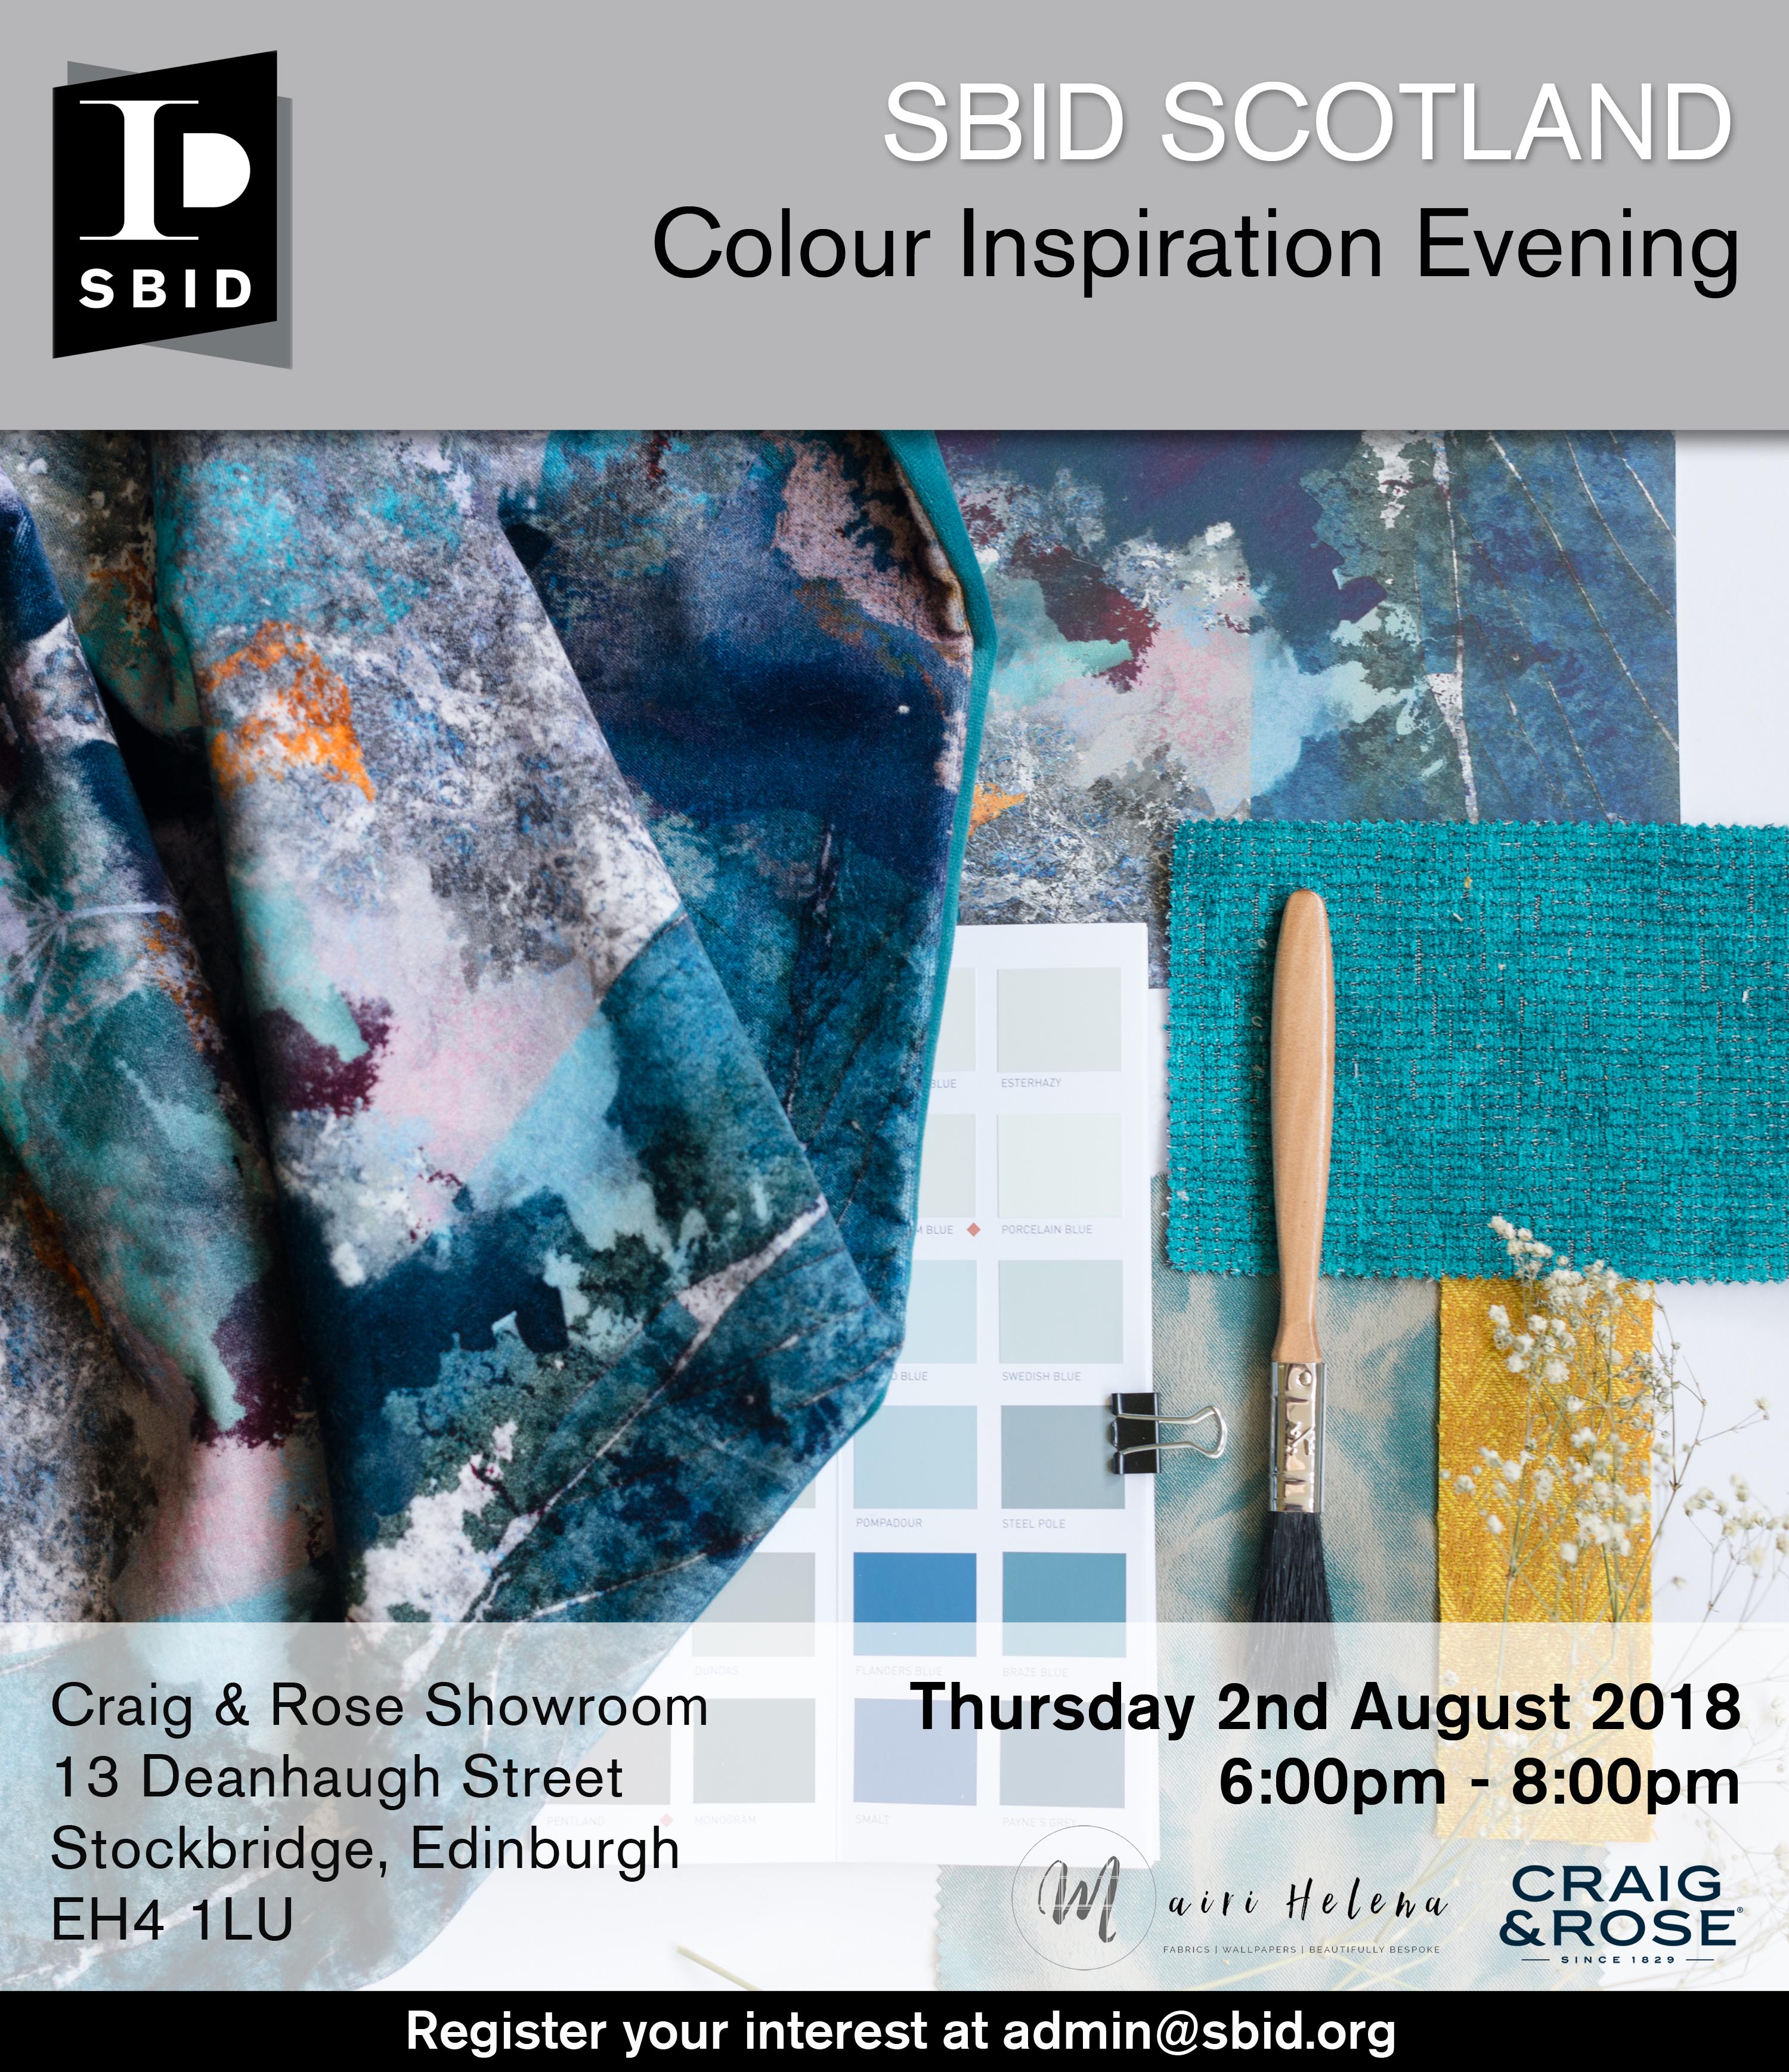 SBID Scotland interior design events invitation for Colour Inspiration Evening